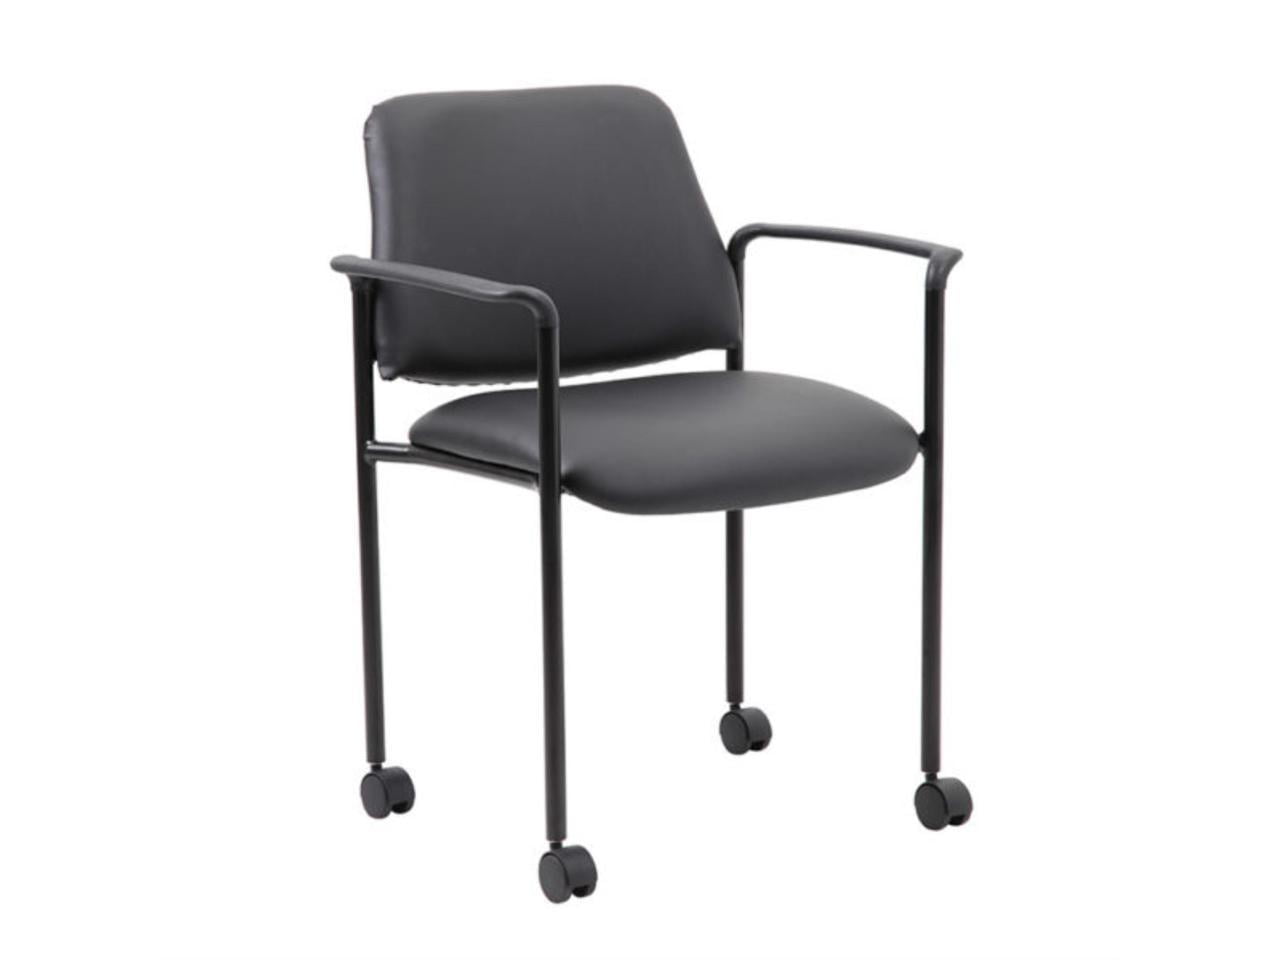 B9503r-cs Square Back Diamond Stacking Chair With Arm, Black Caressoft